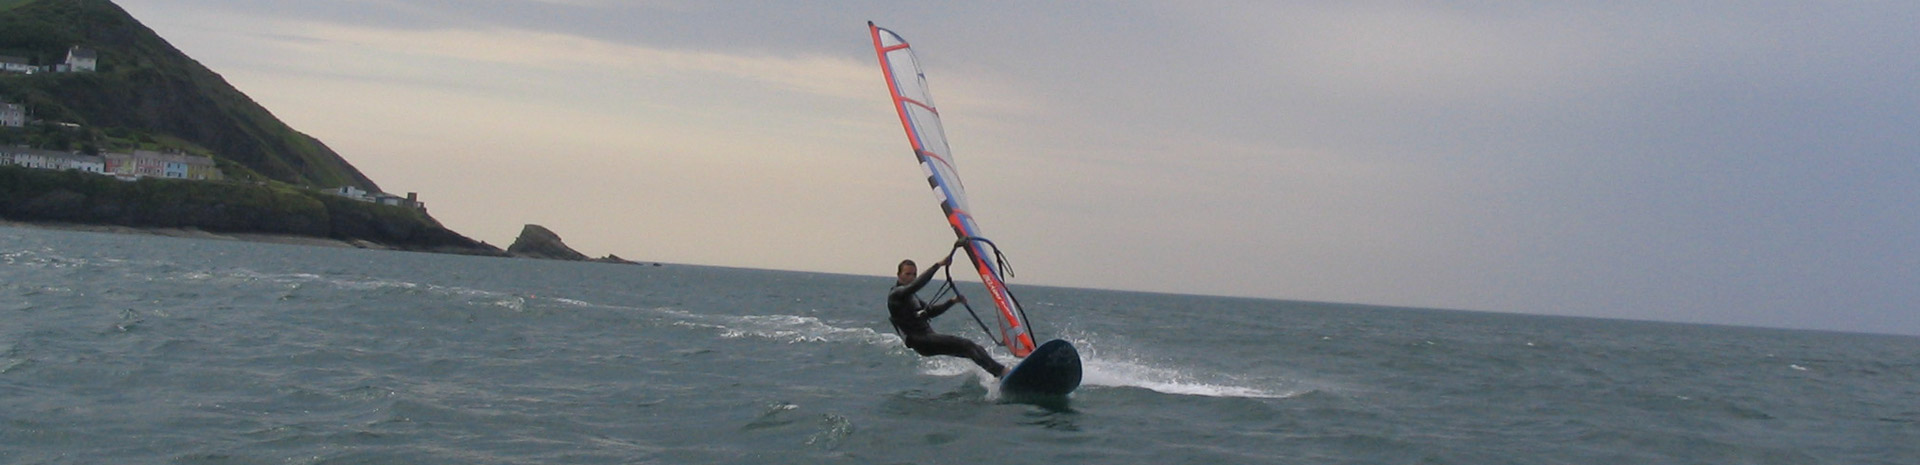 Person windsurfing